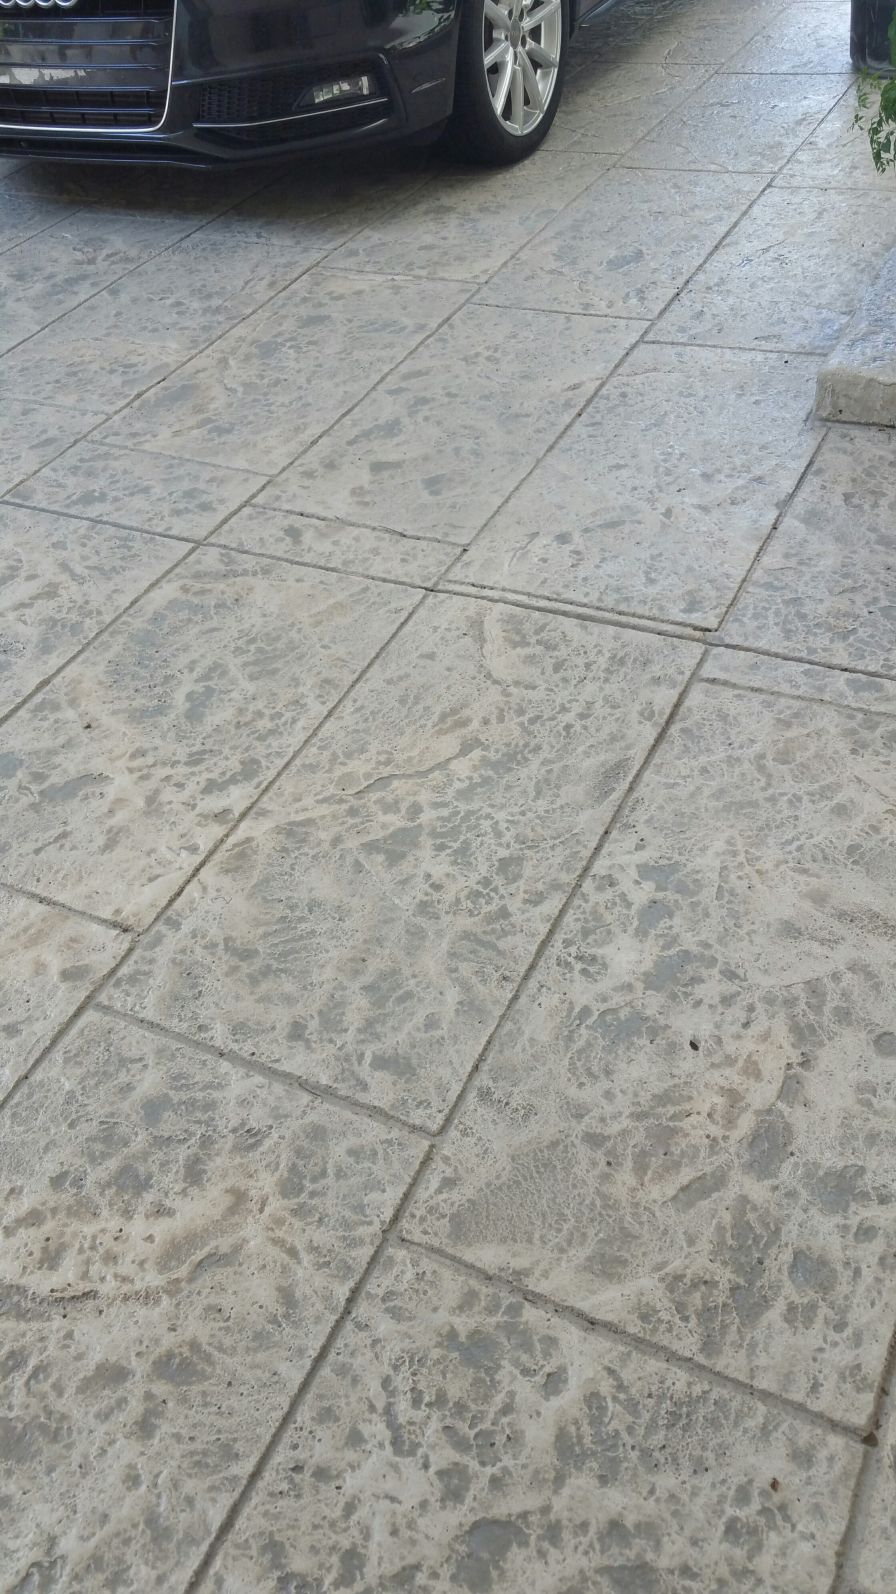 Stamped concrete driveway resurfacing in modern large gray tile pattern